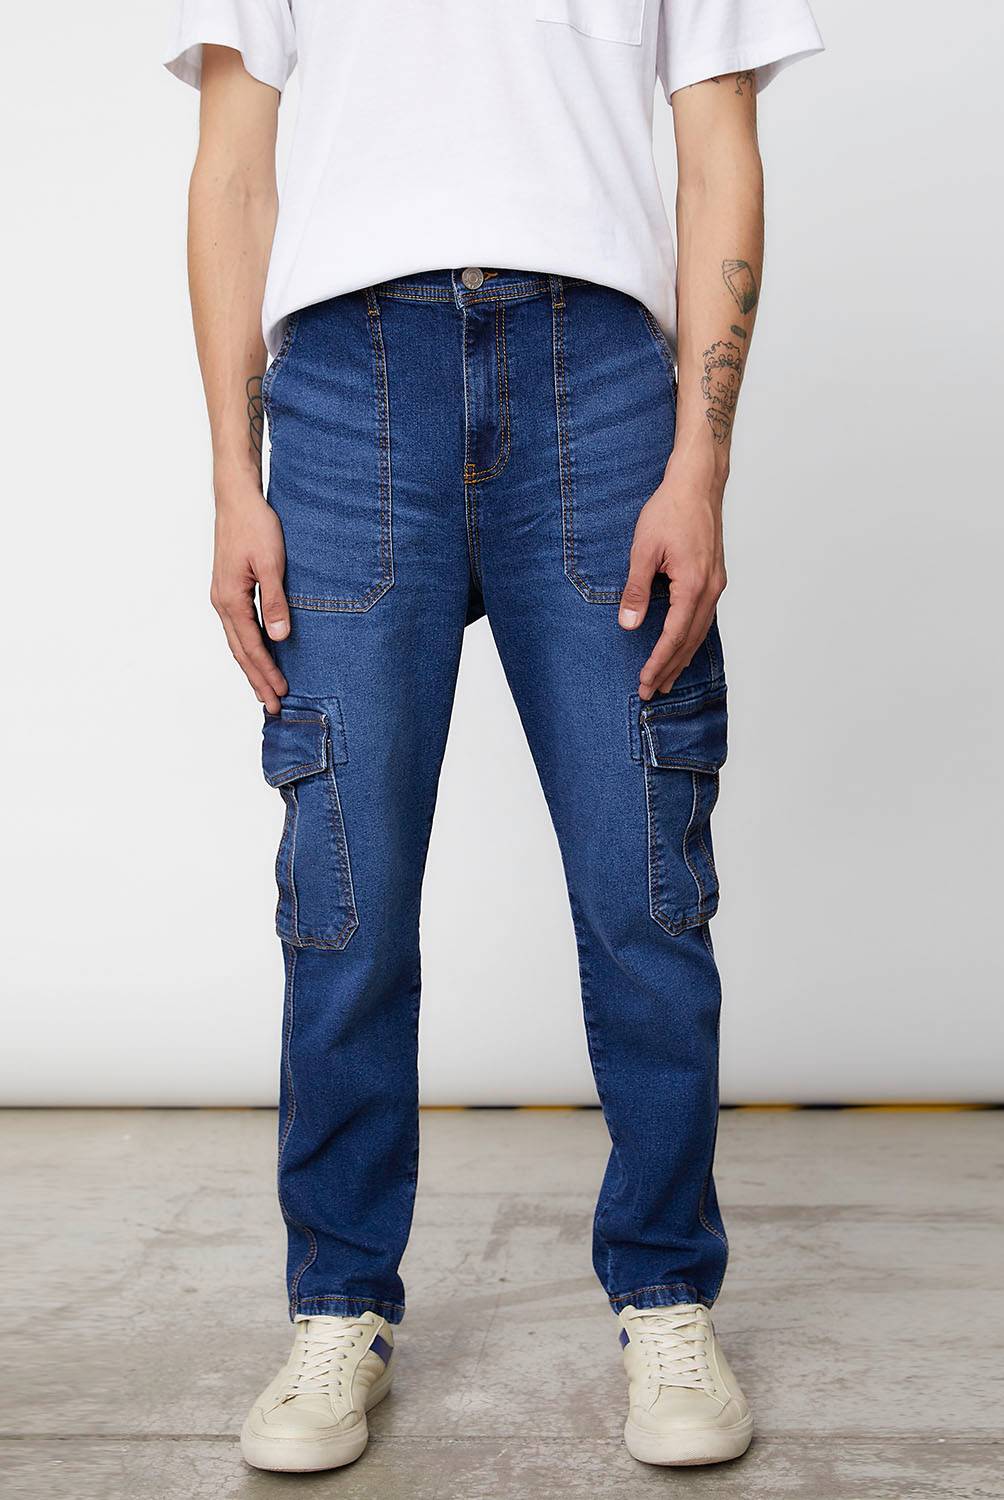 AMERICANINO - Jeans Slim Fit Hombre Americanino